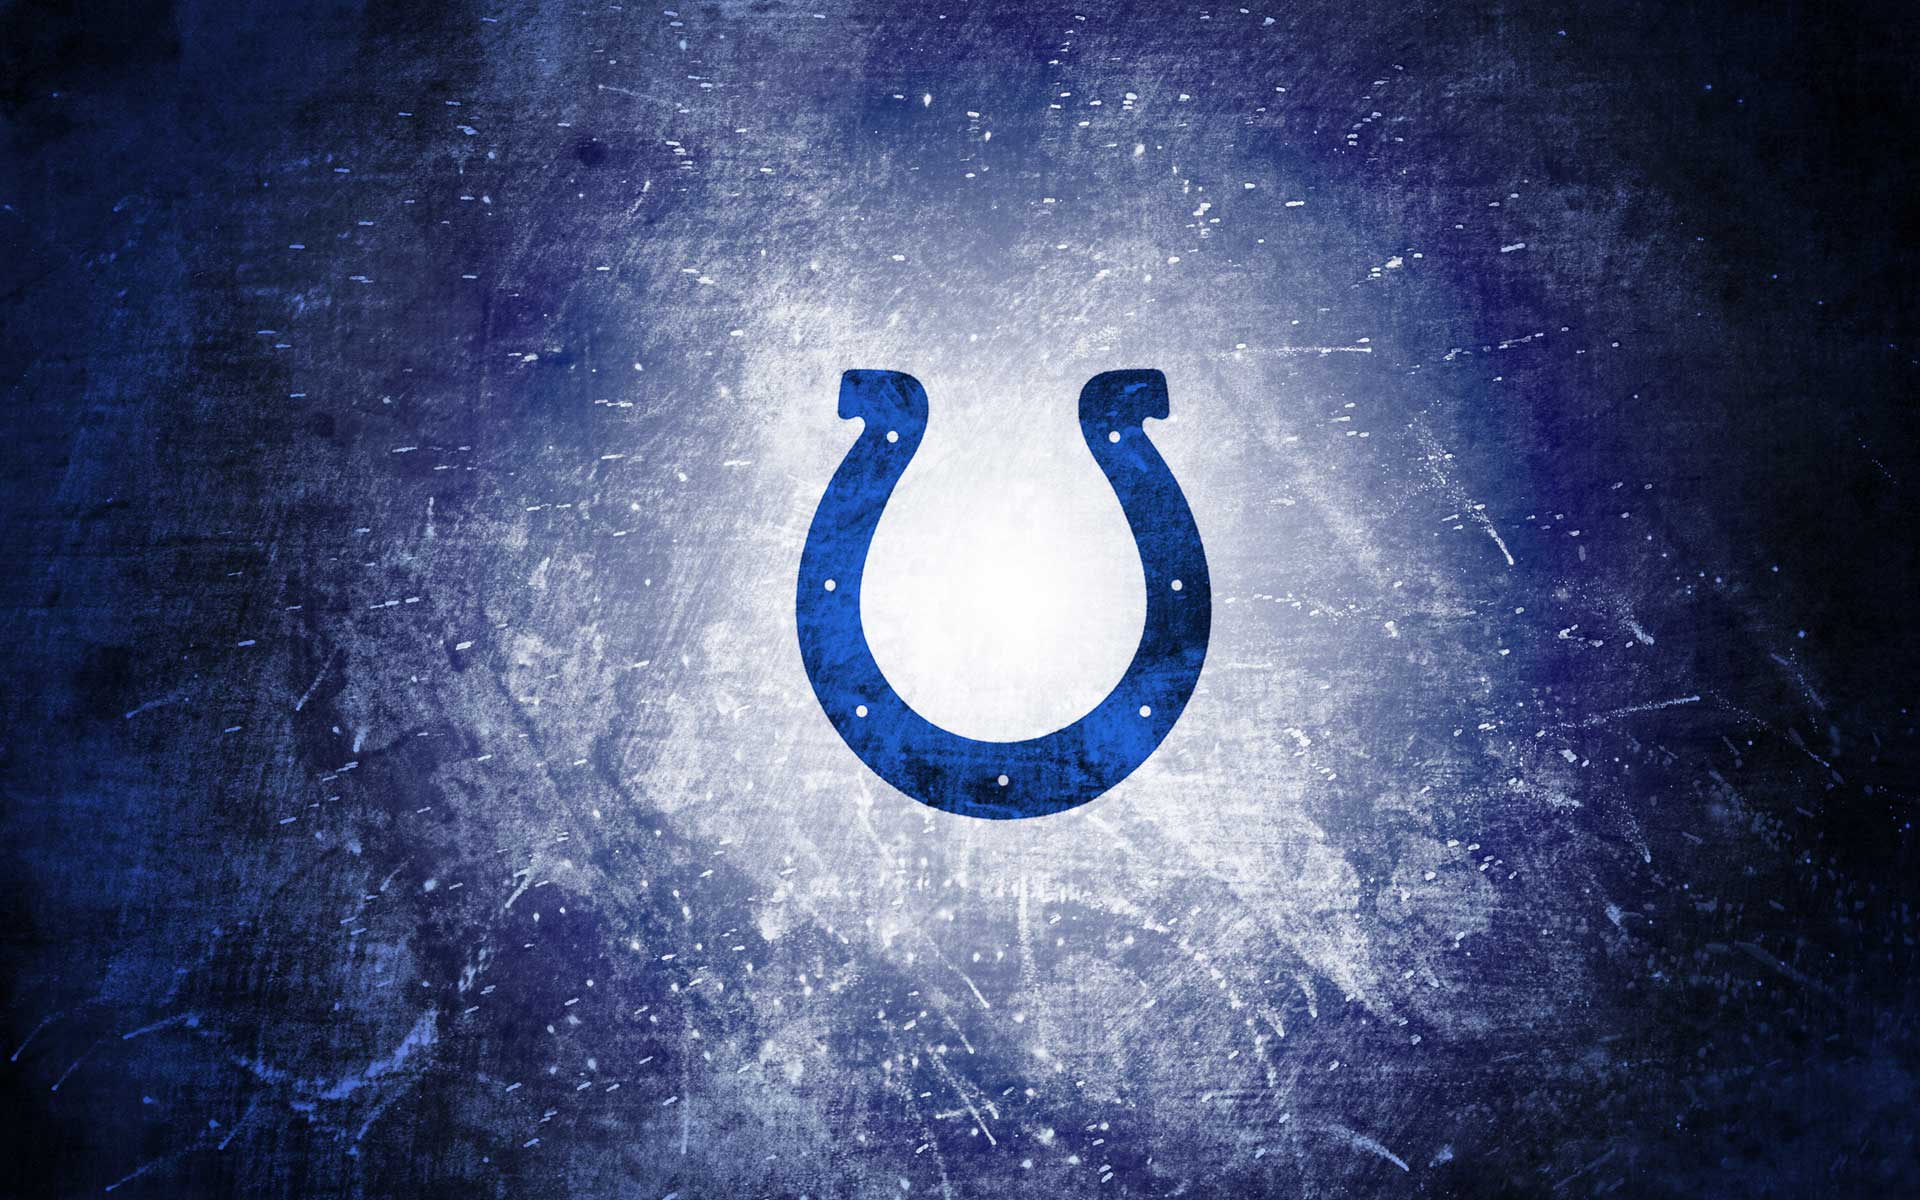 Free Indianapolis Colts desktop image